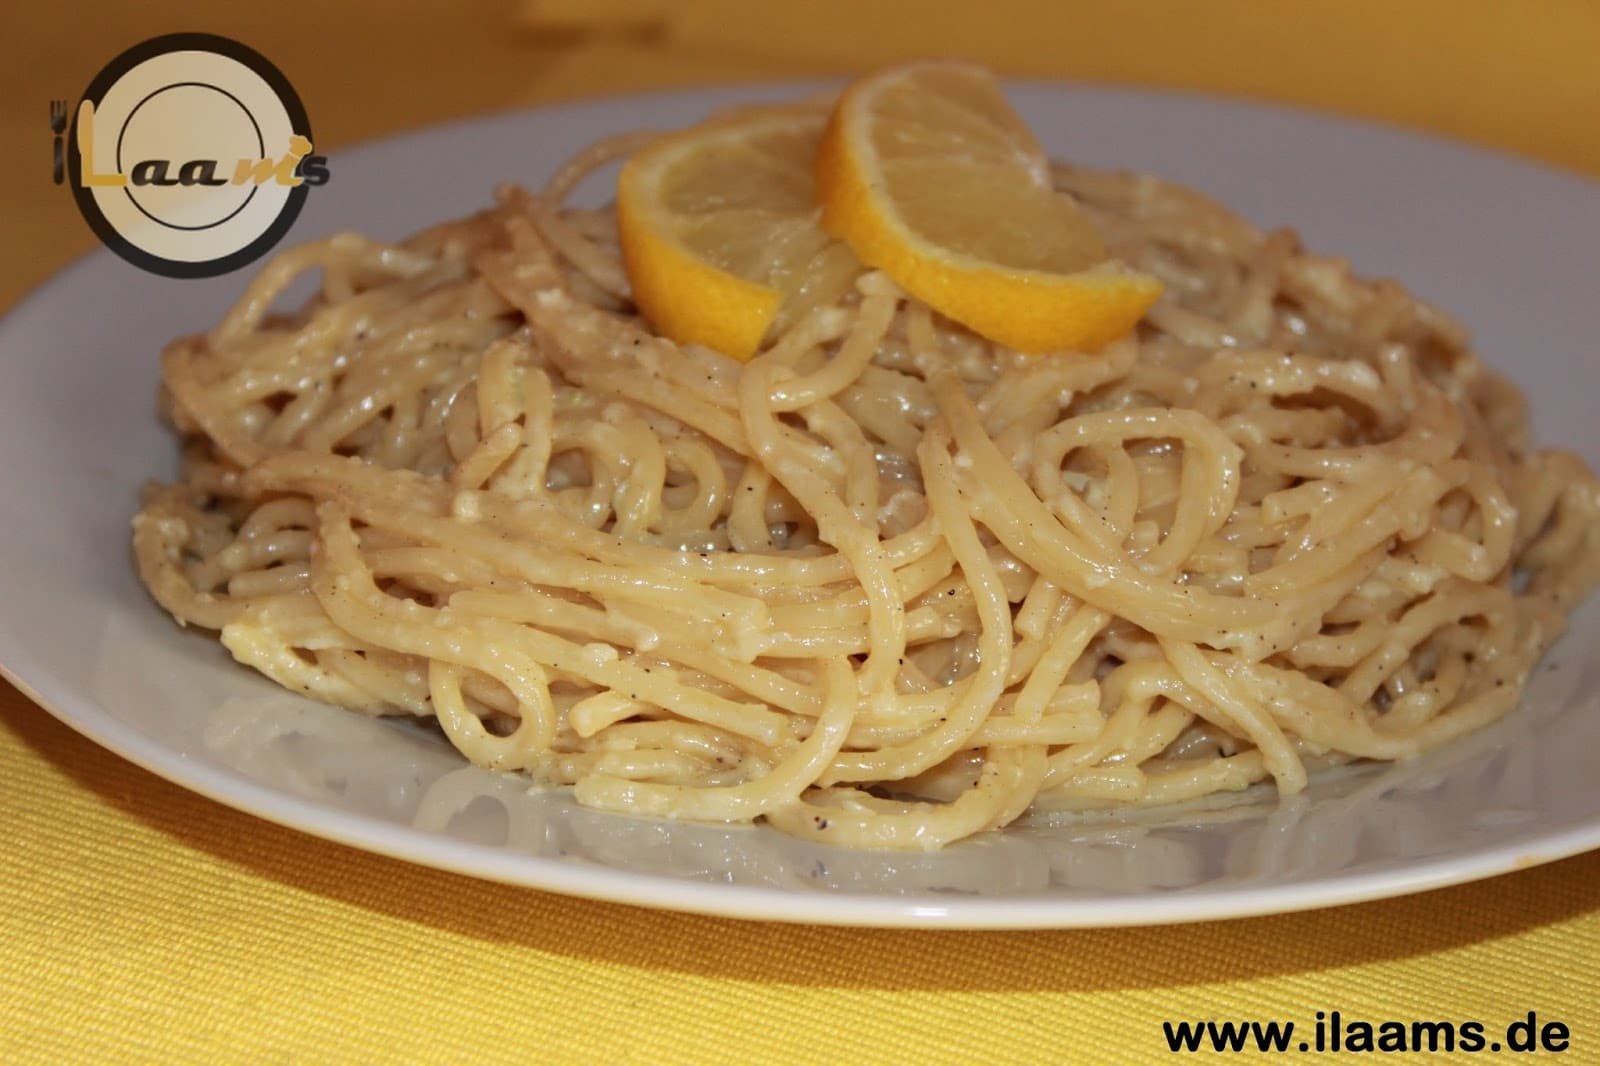 Knoblauch-Zitronen Spaghetti